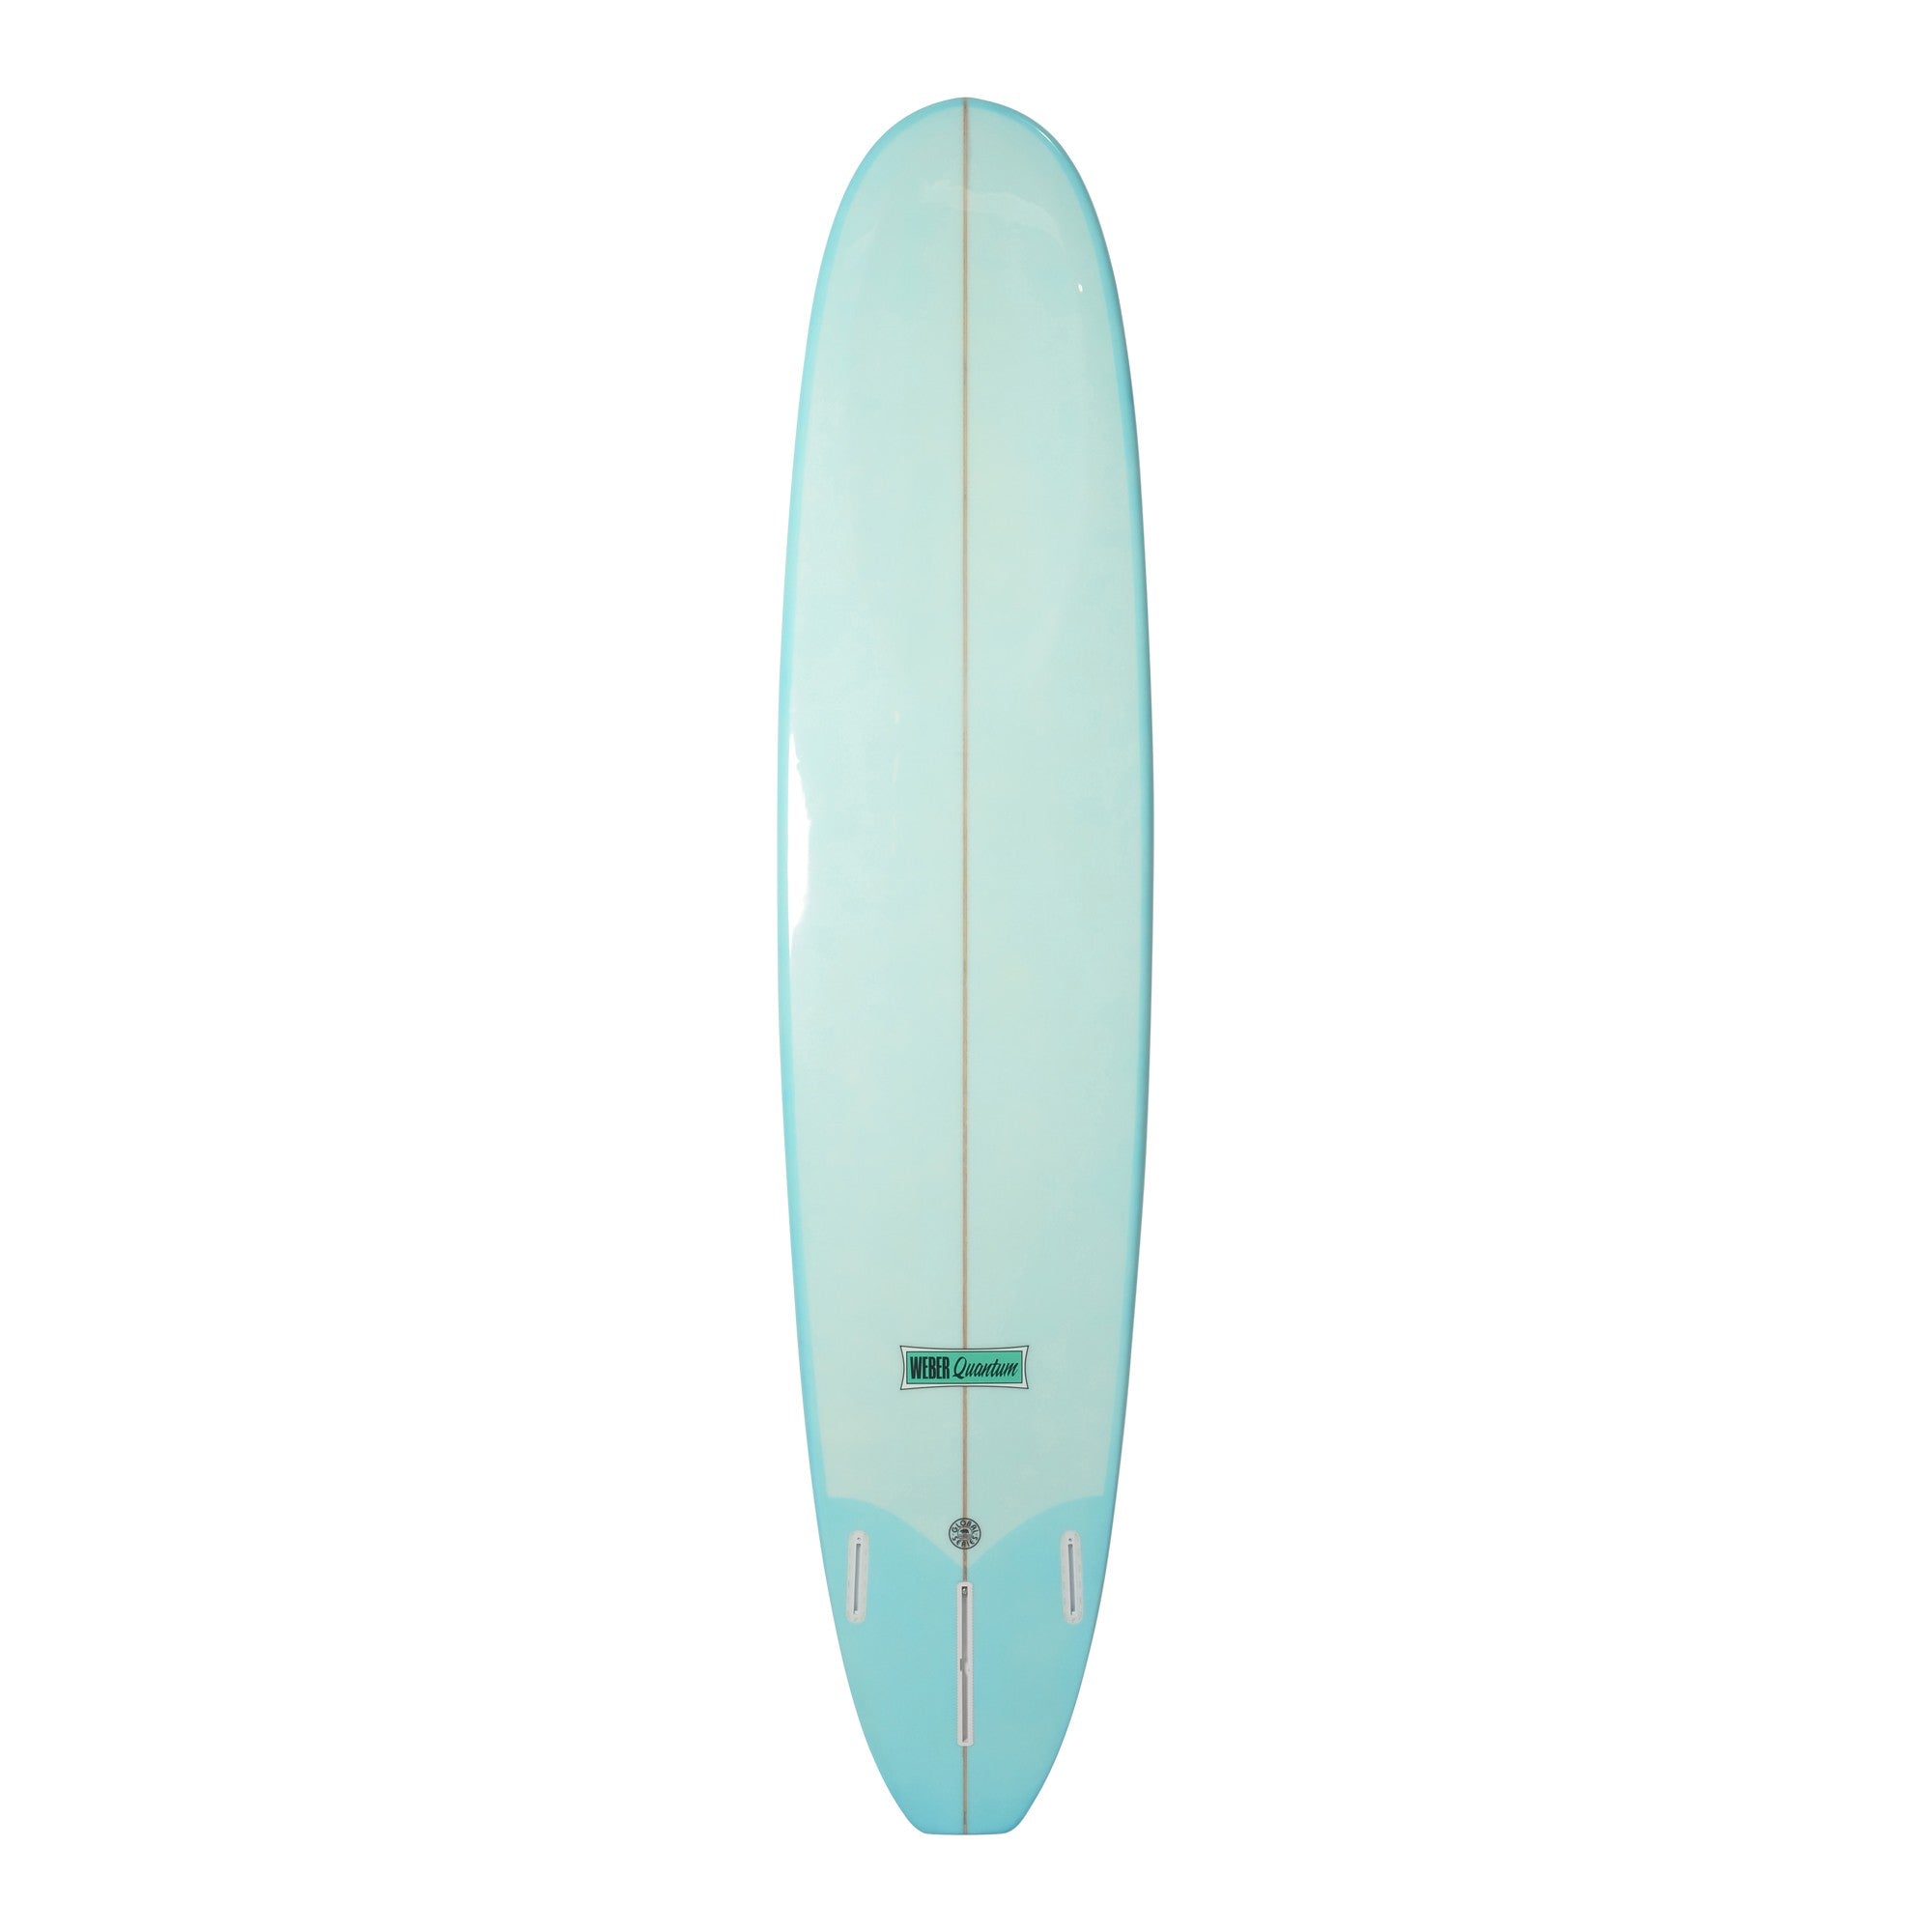 WEBER SURFBOARDS - Quantum 7'2 - Blue